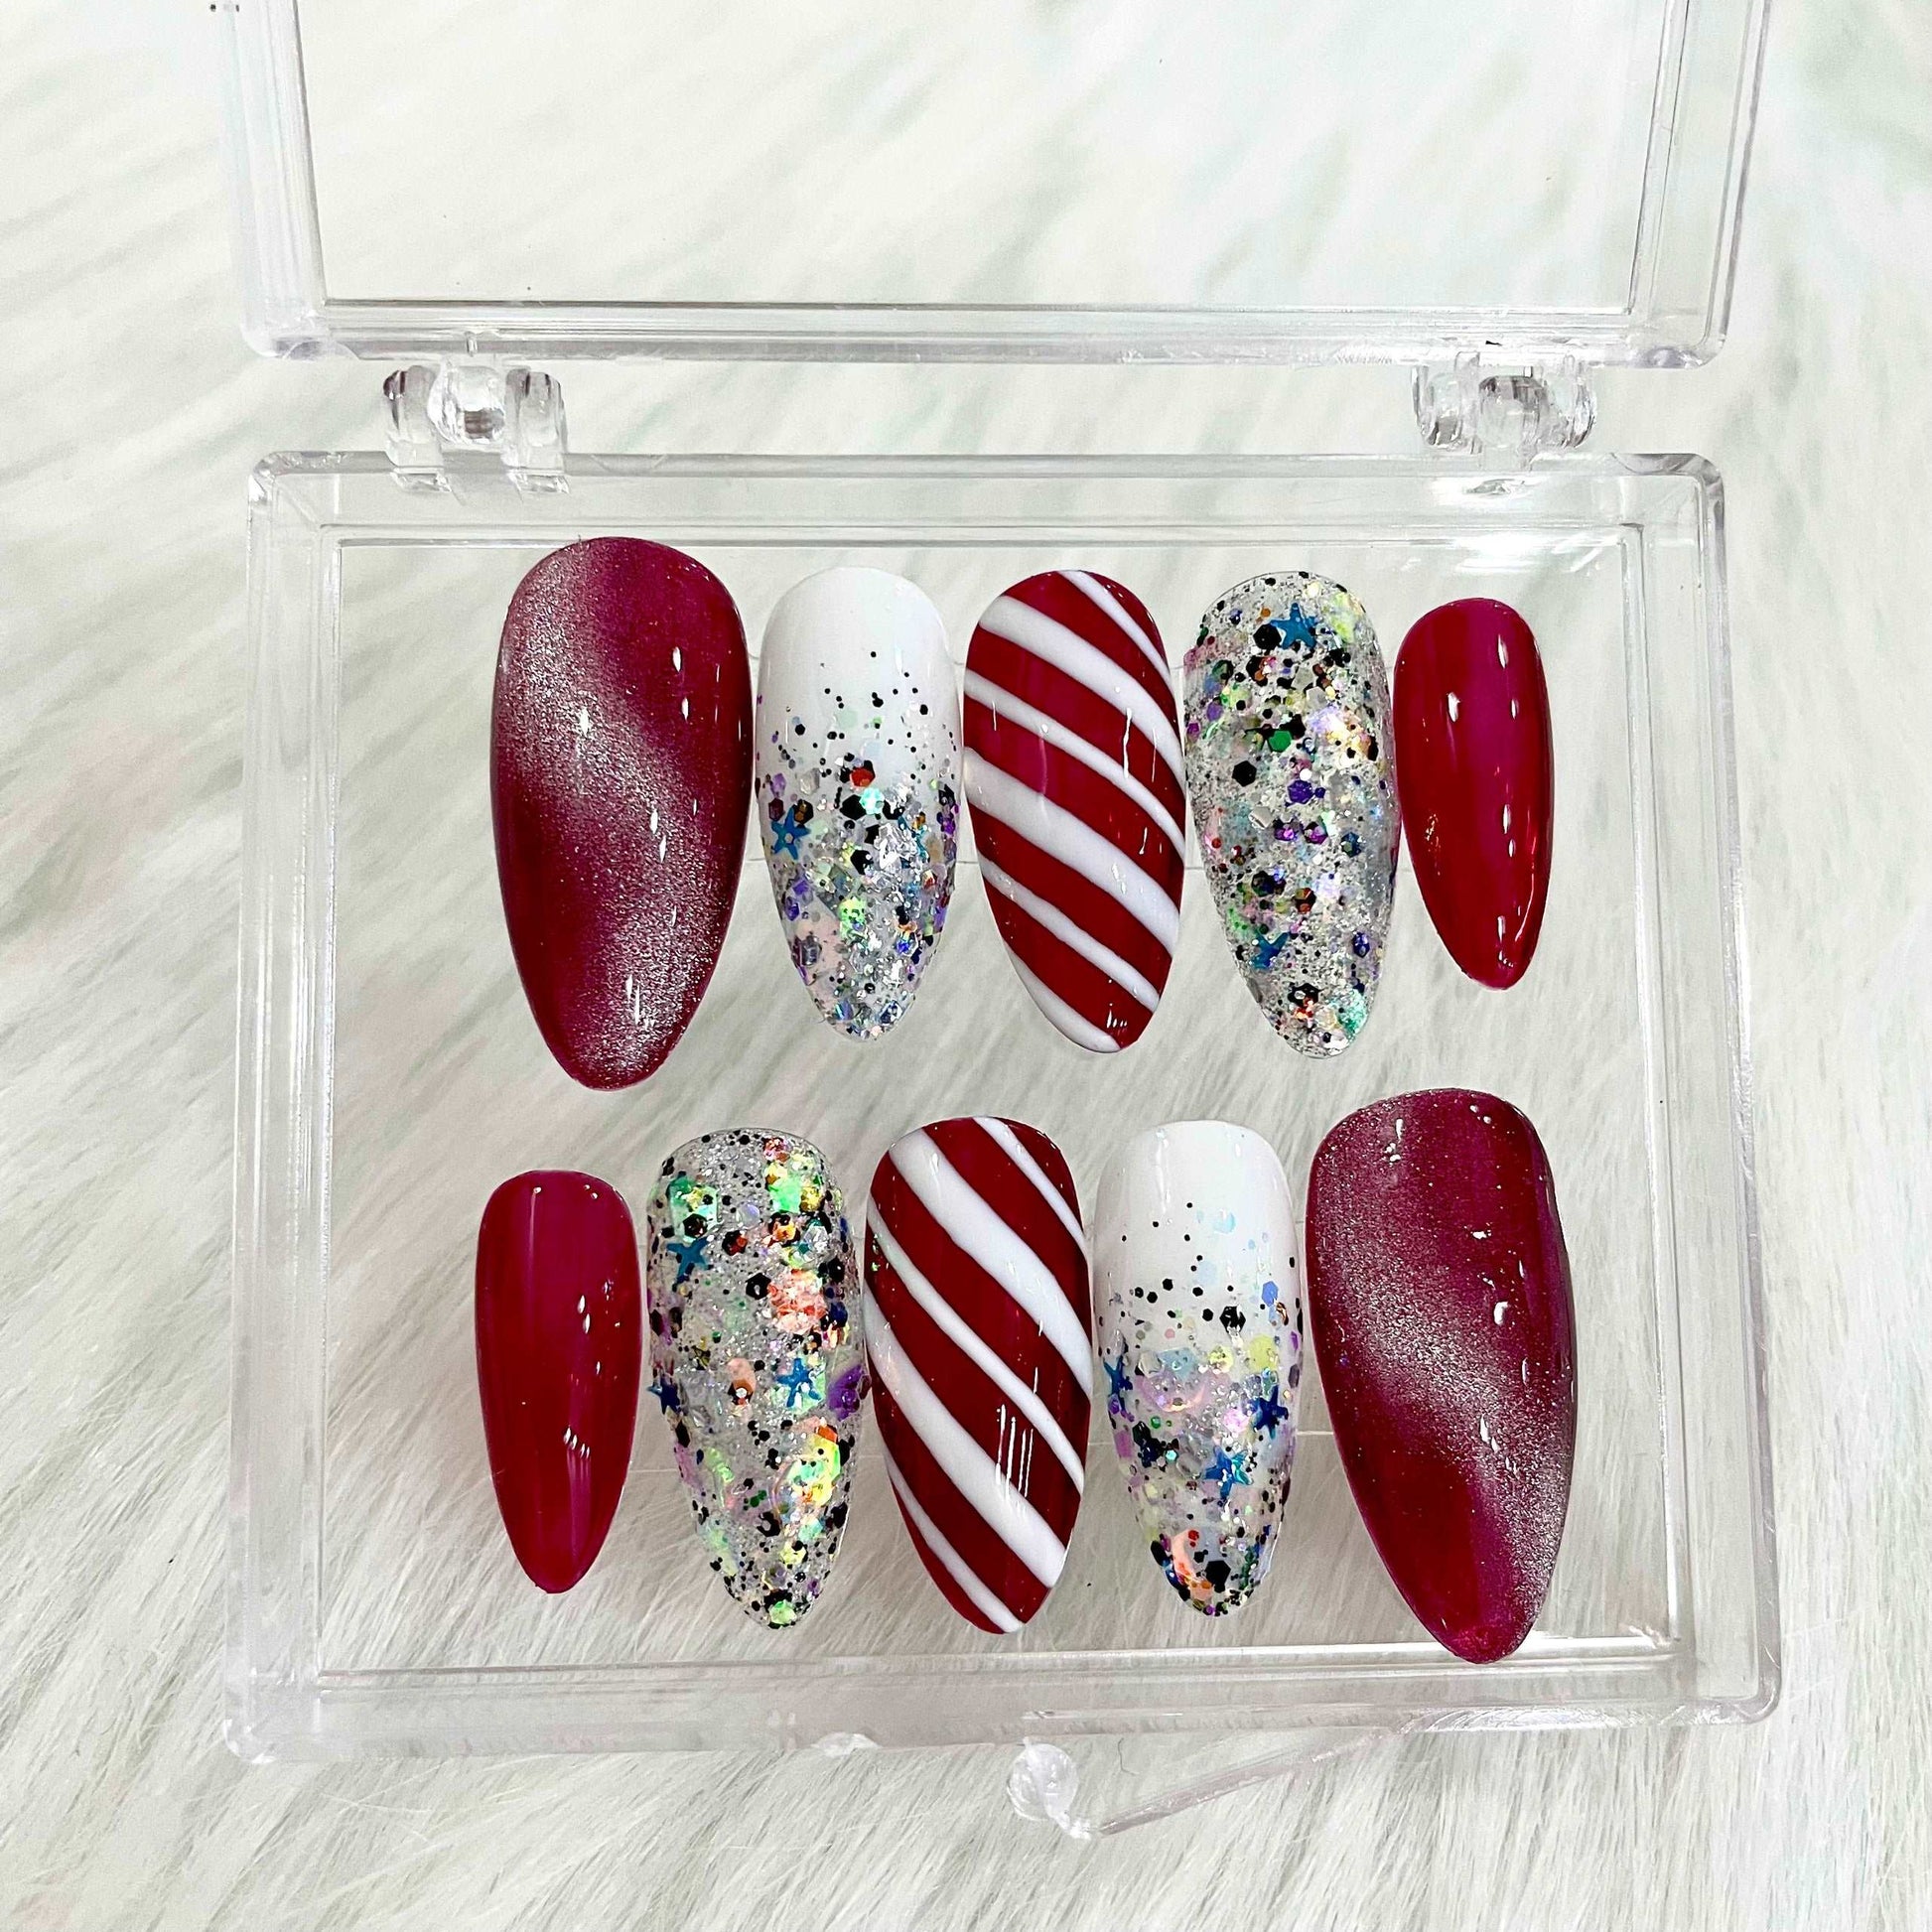 Handmade Christmas Press On Nails - Candy Cane Magic Cat Eye Design.